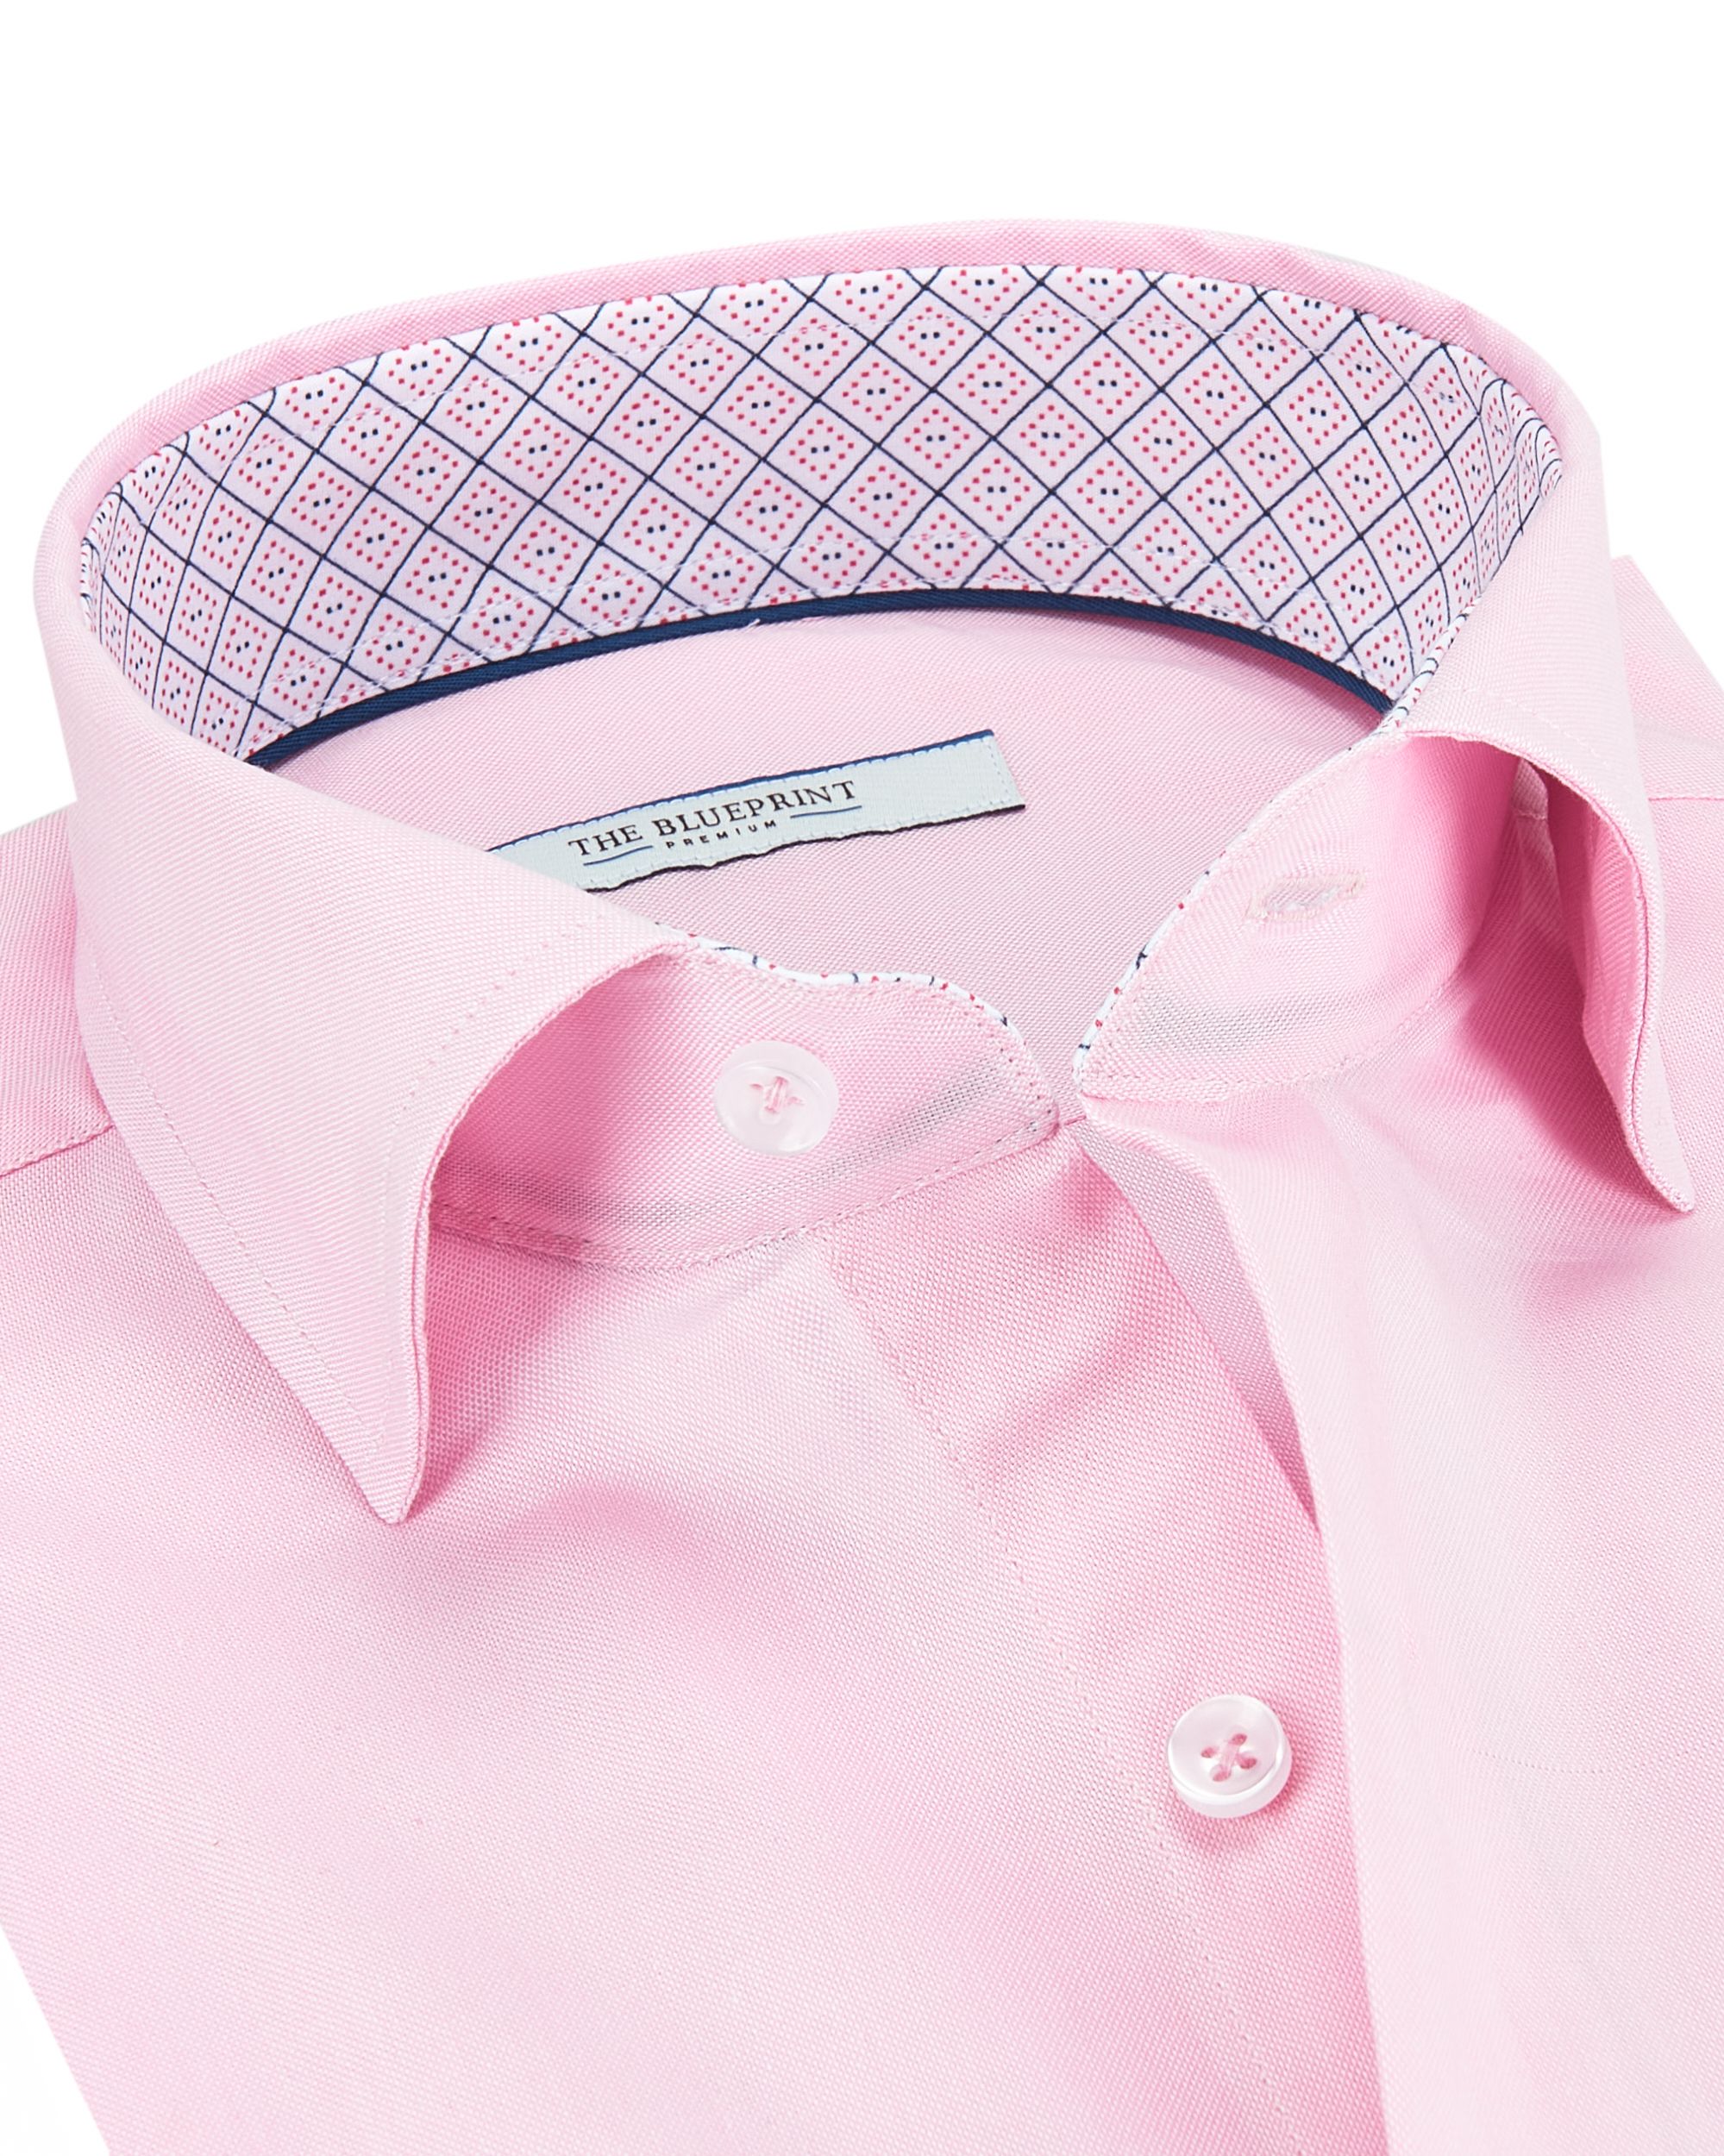 The BLUEPRINT Premium Trendy overhemd LM Roze uni 084499-001-L